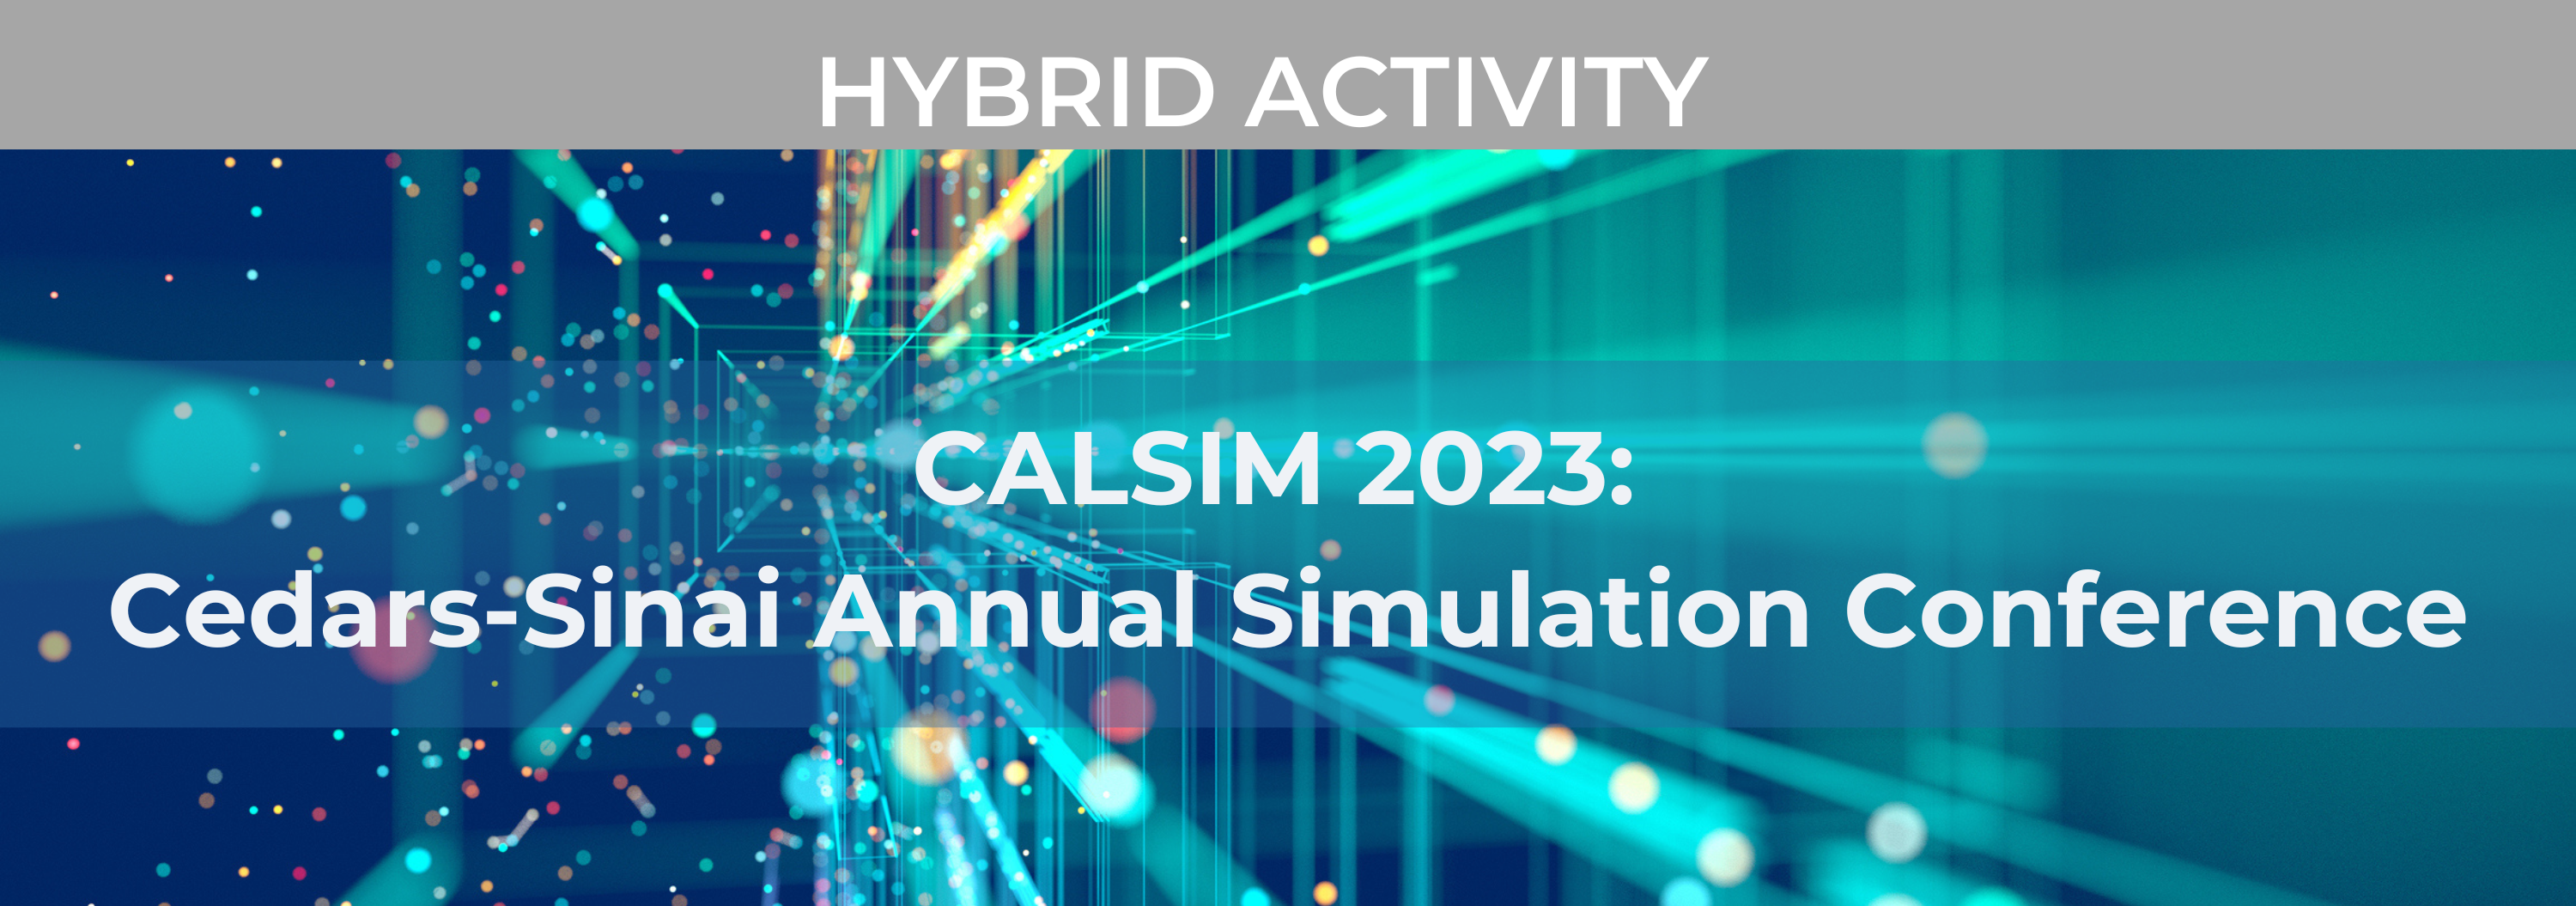 CALSIM 2023: Cedars-Sinai Annual Simulation Conference Banner